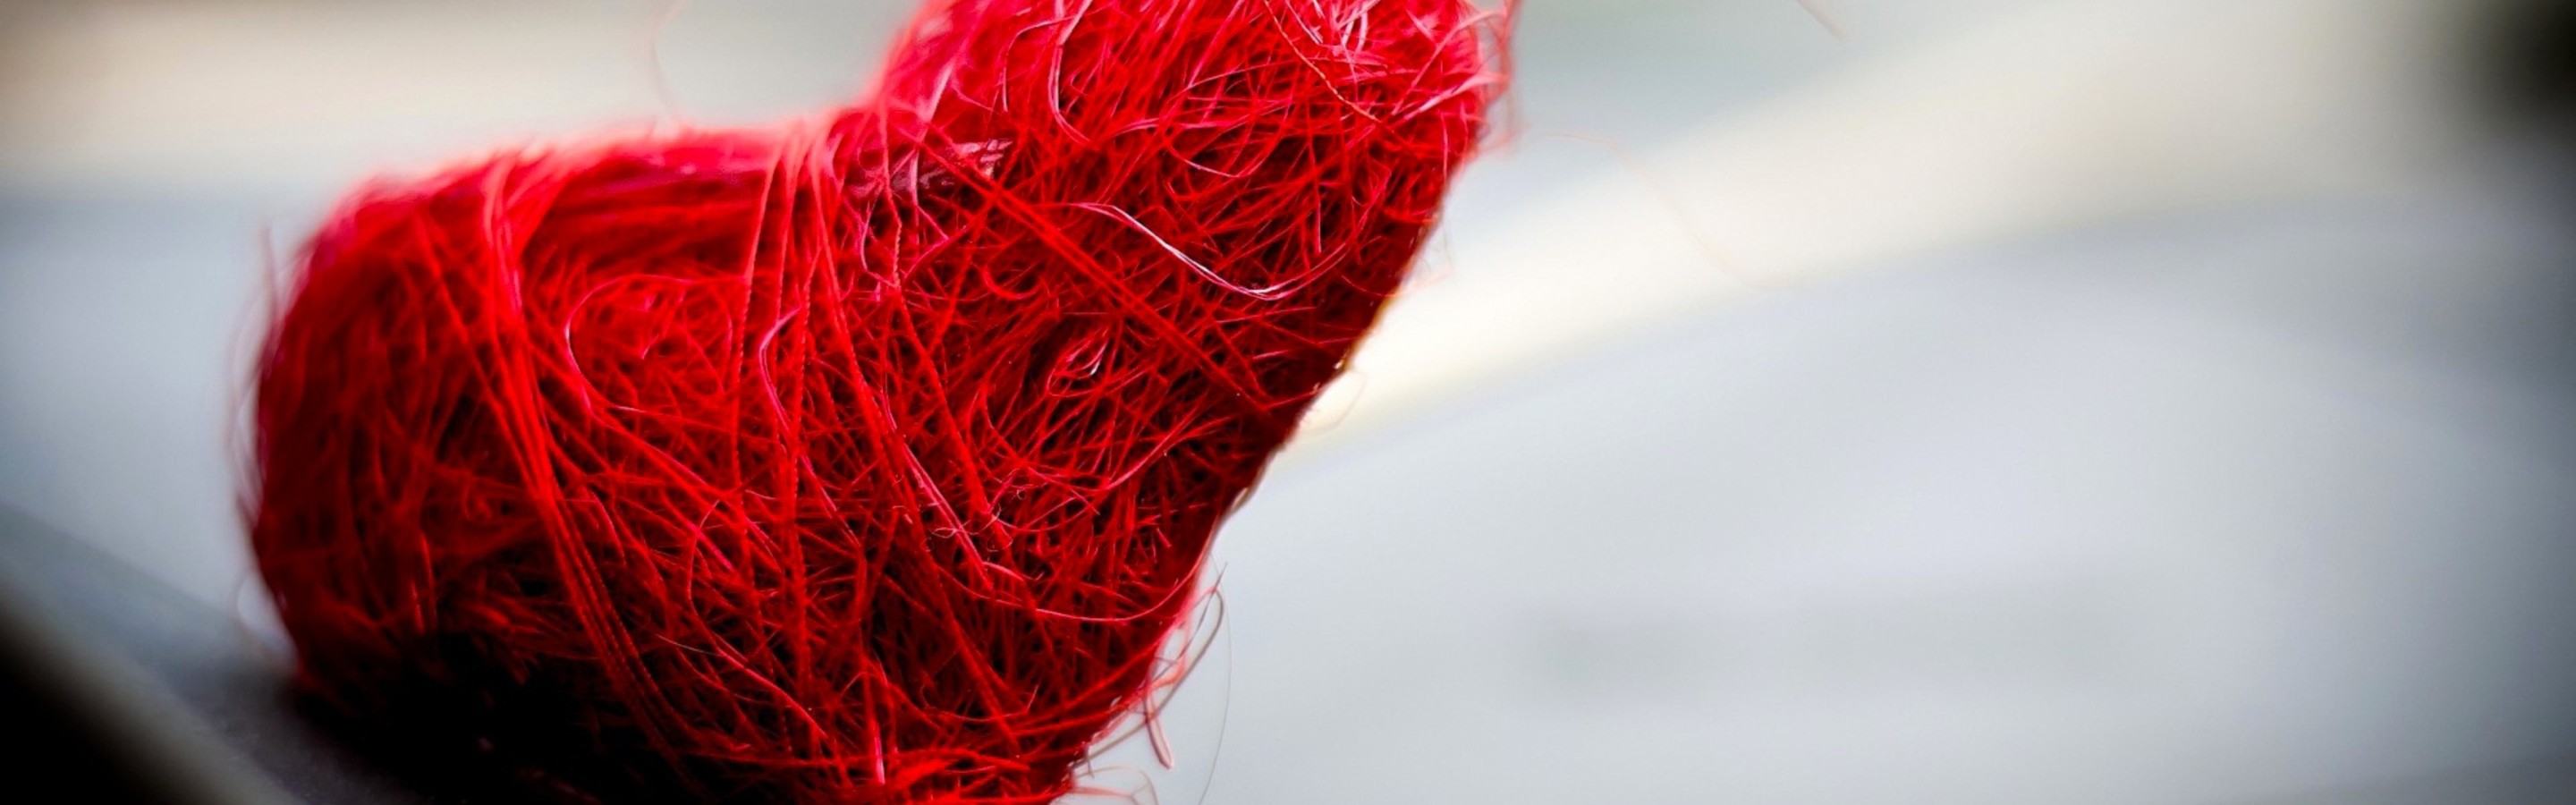 A heart made of red thread - Love wallpaper Wallpaper Download 2880x900